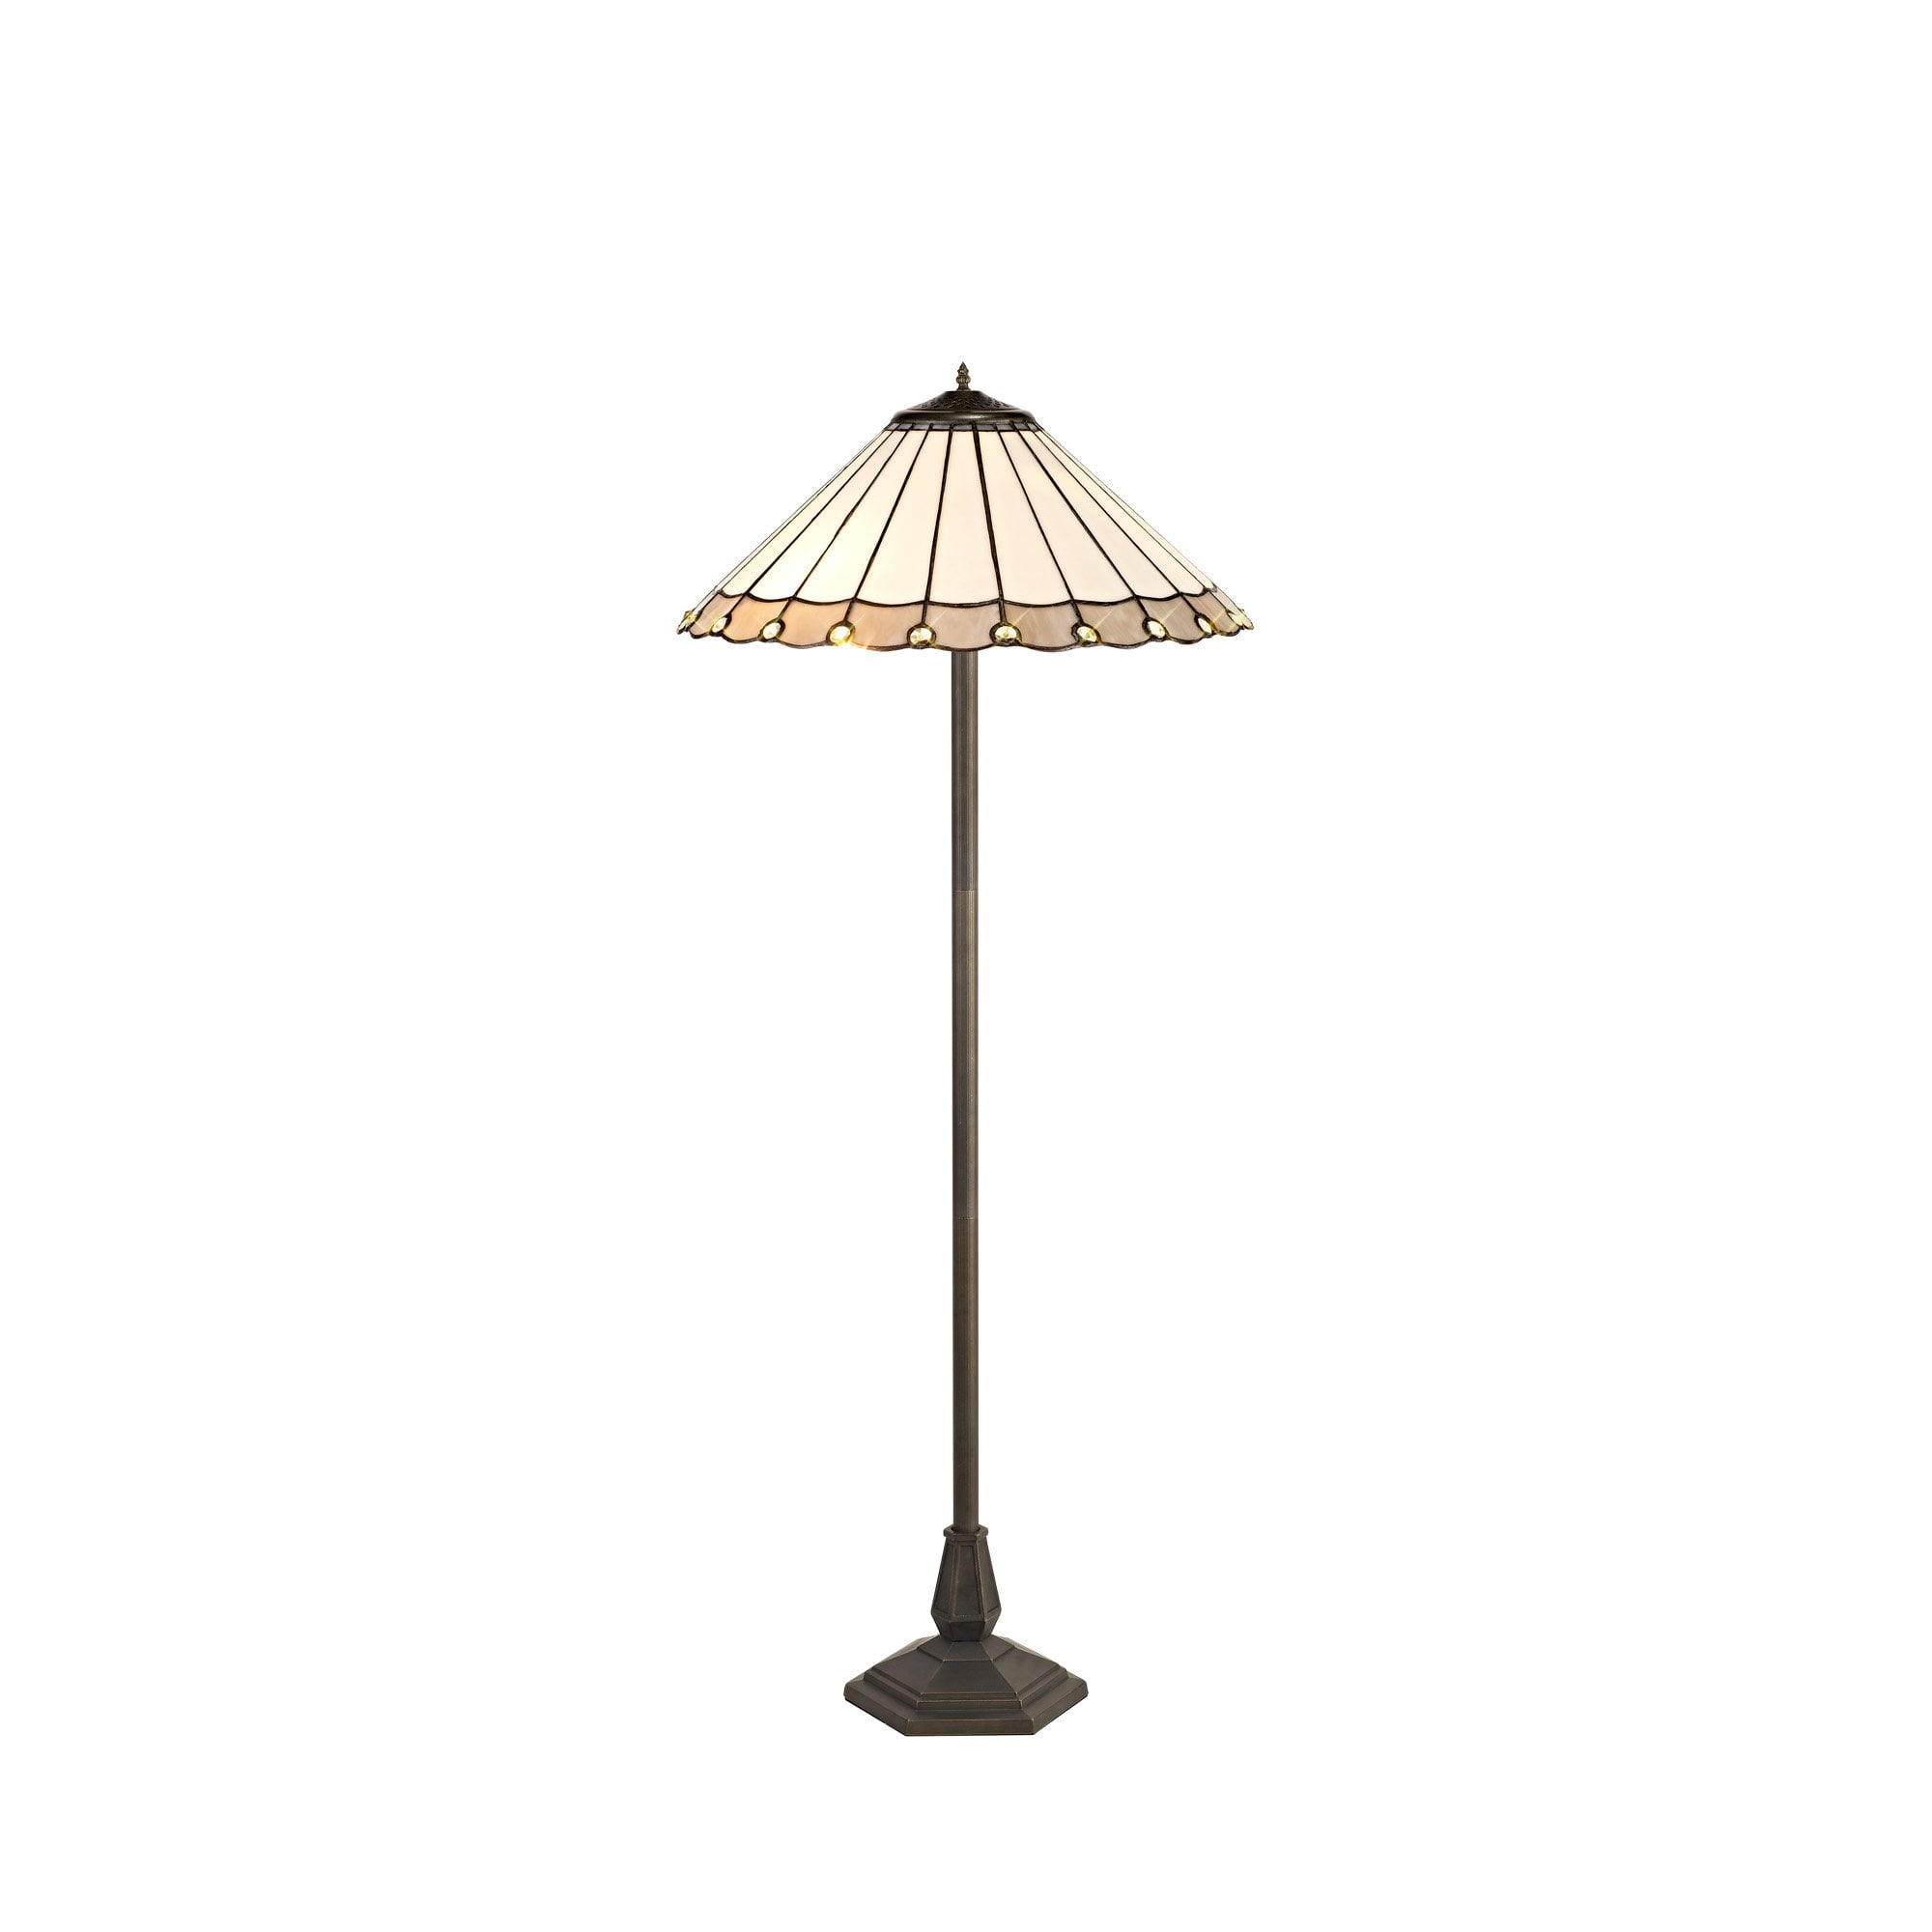 2 Light Octagonal Floor Lamp E27 With 40cm Tiffany Shade, Grey/Cream/Crystal/Aged Antique Brass